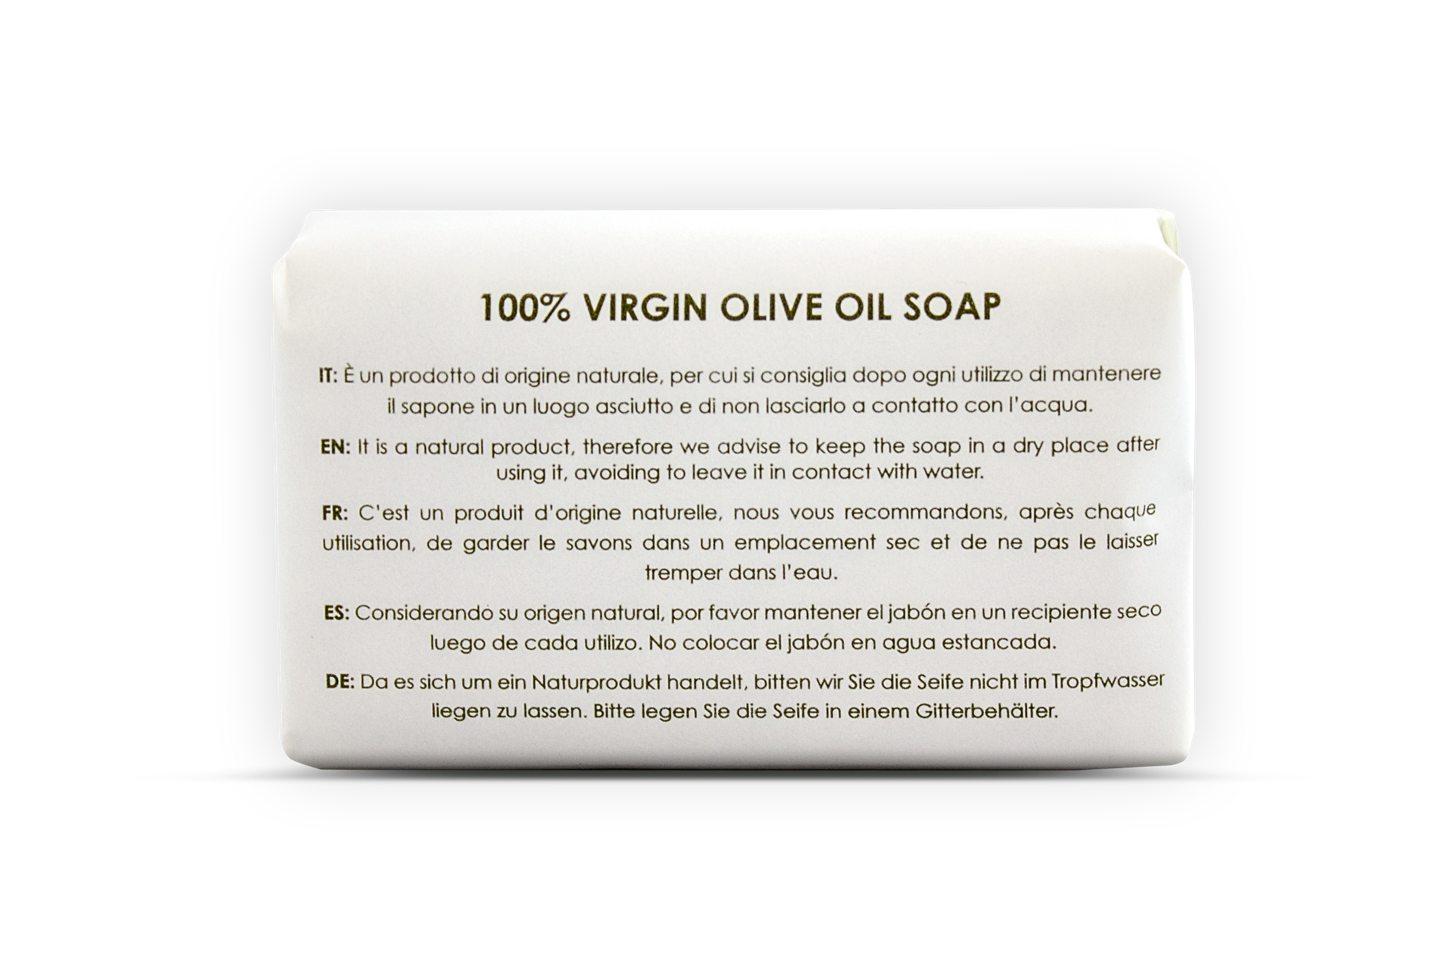 Olivella Fragrance Free Bar Soap 3.52 Oz - Olivella